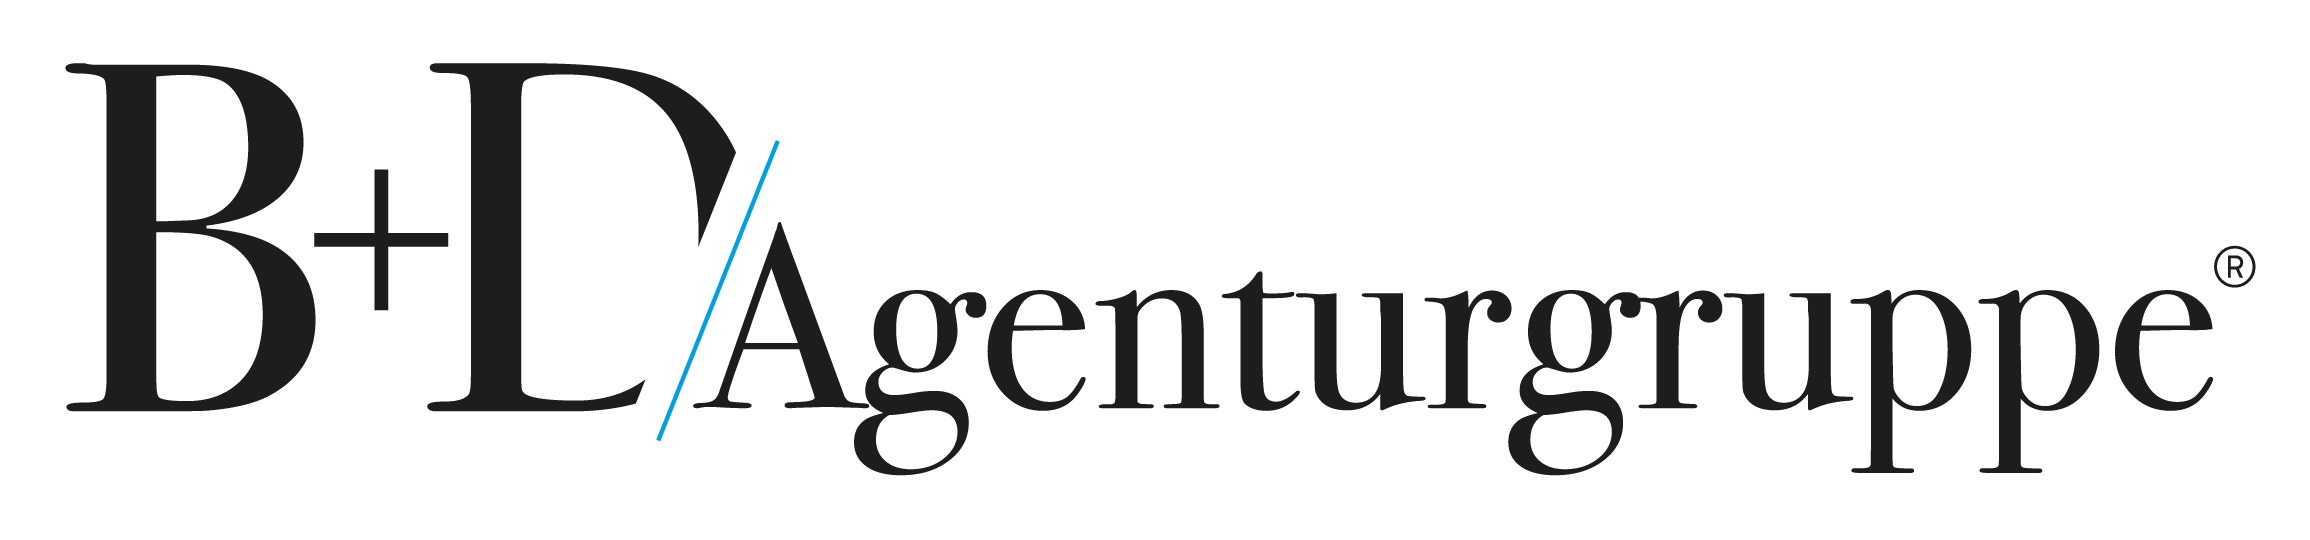 Logo_Agenturgruppe2